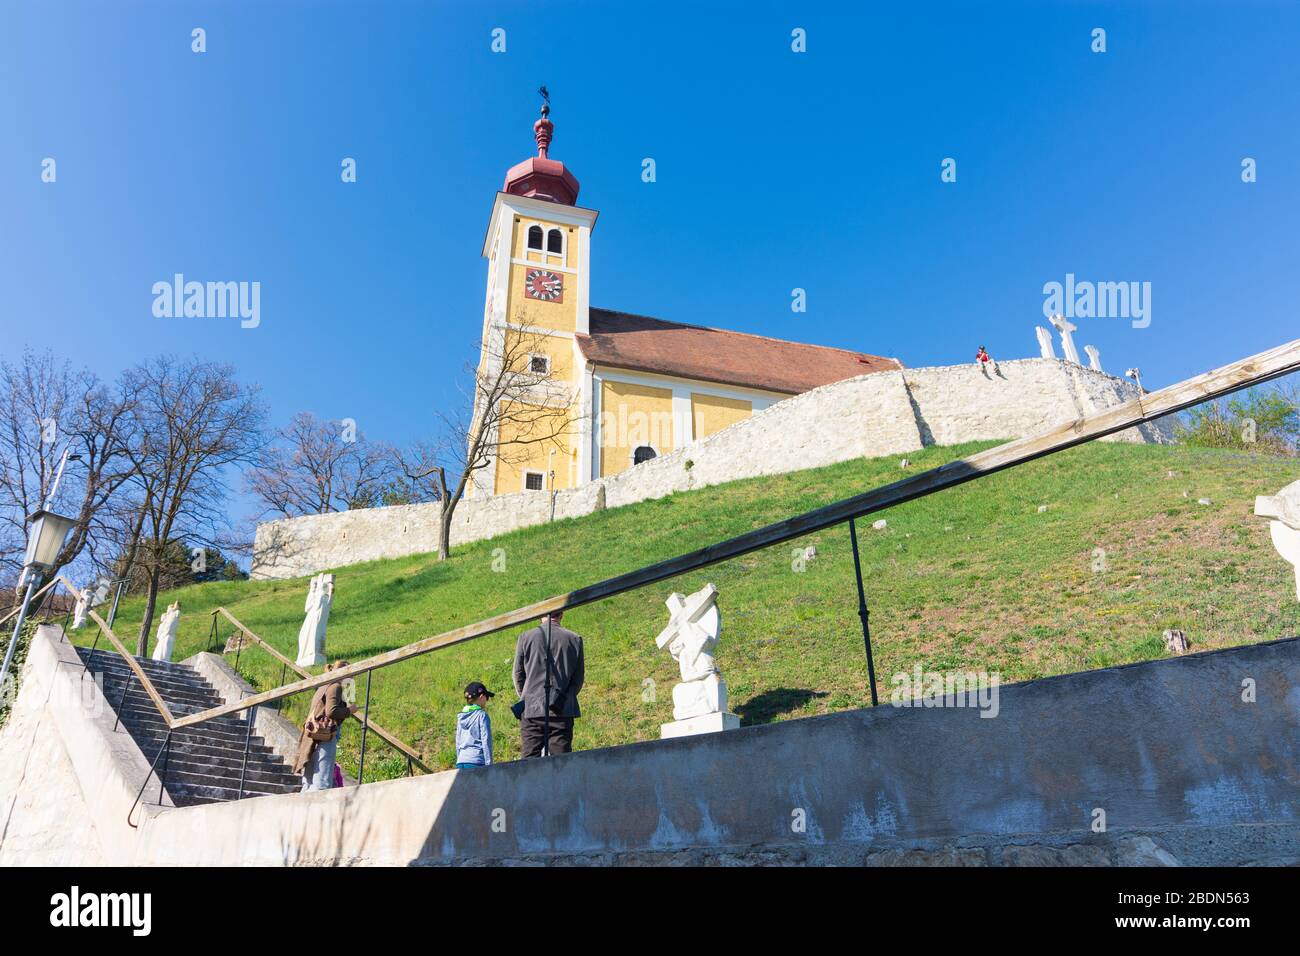 Donnerskirchen: church, in Neusiedler See (Lake Neusiedl), Burgenland, Austria Stock Photo